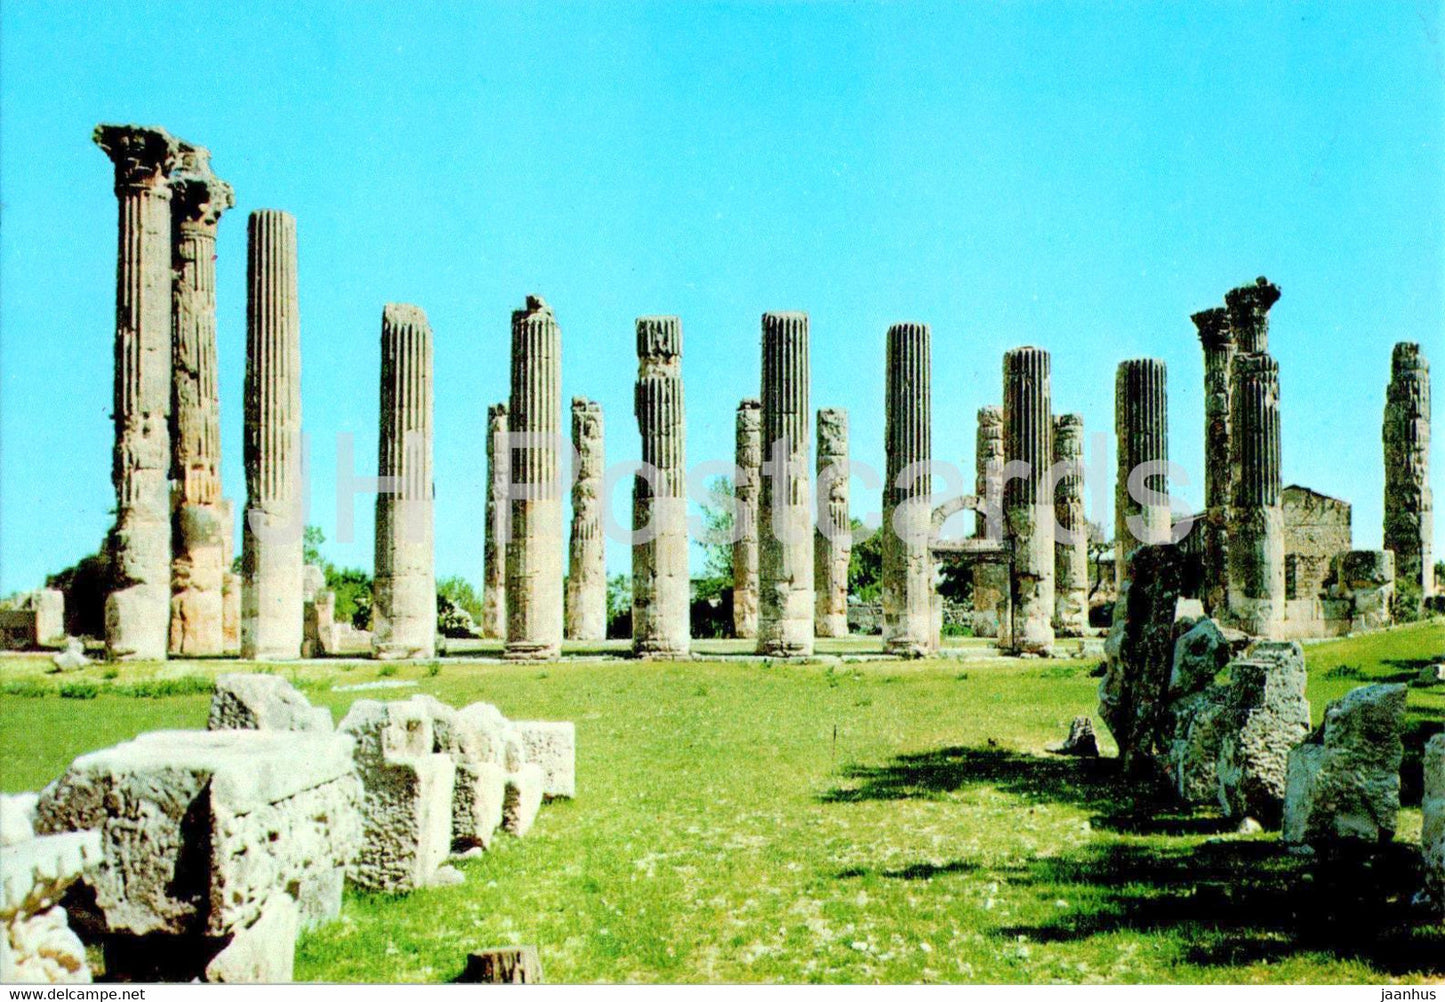 Icel - Mersin - General view of Zeus Temple - ancient world - Turkey - unused - JH Postcards